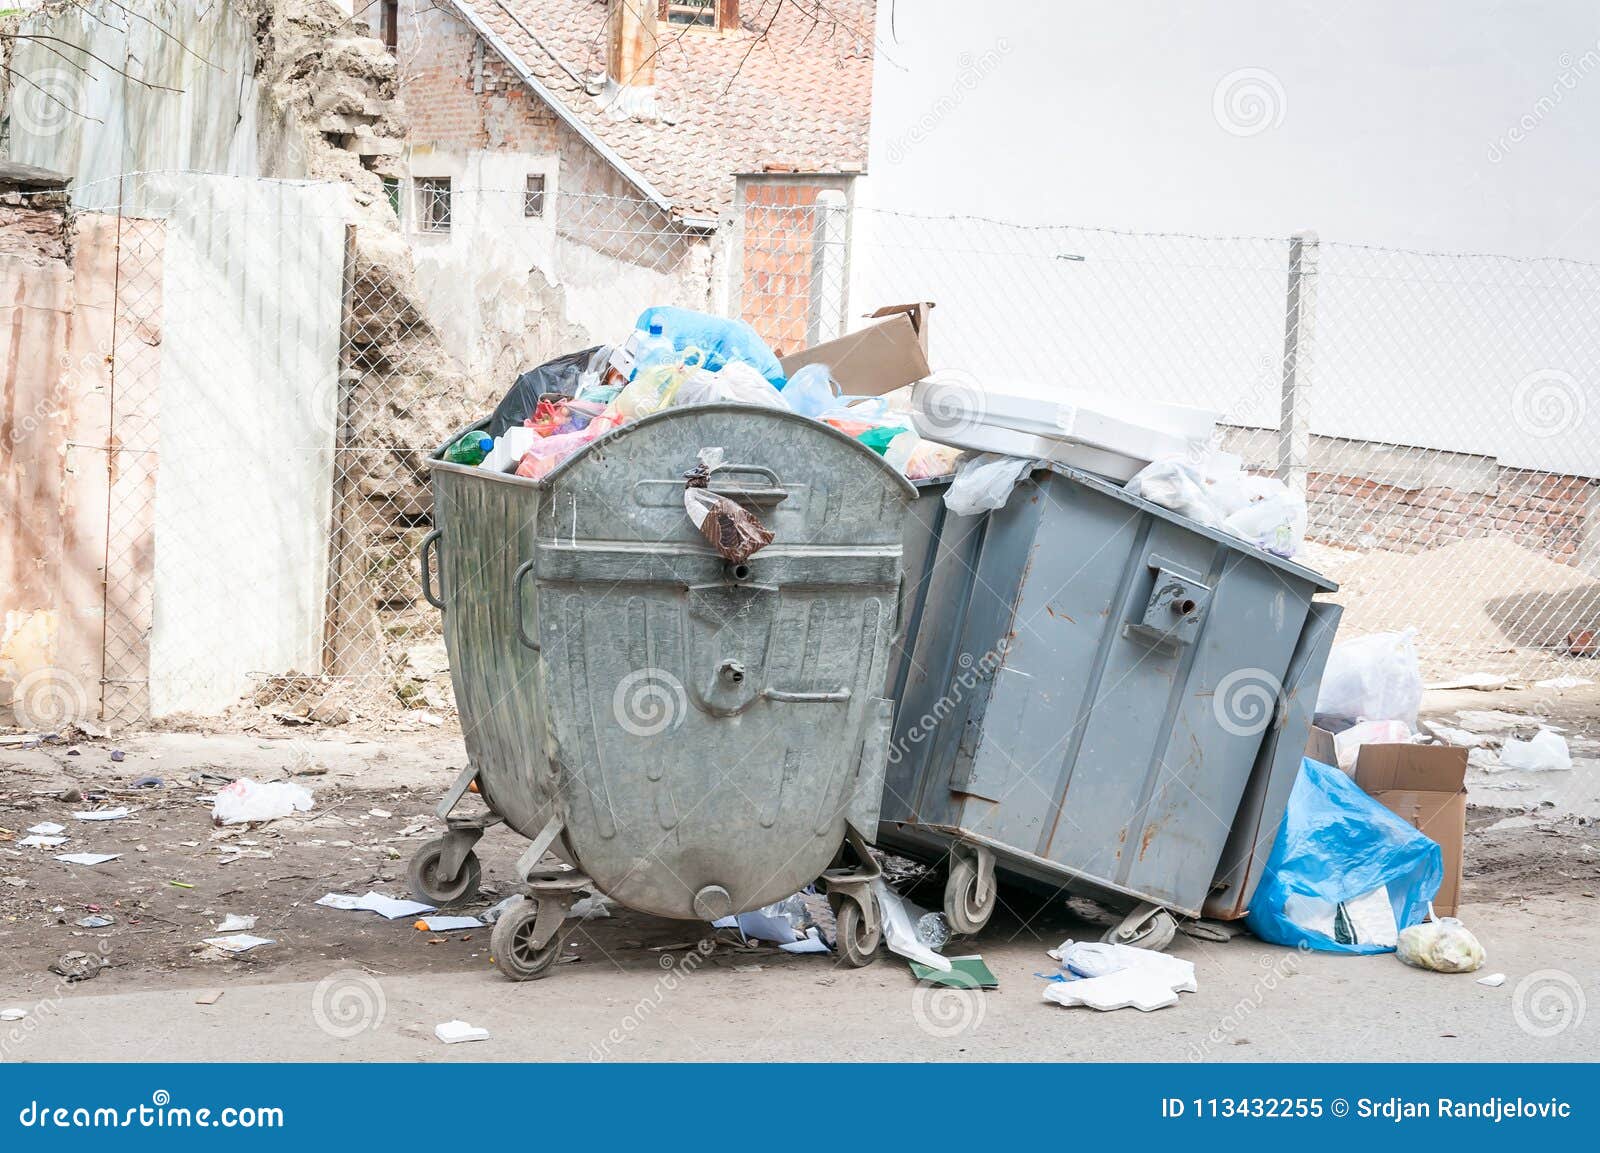 Municipal Trash Cans, Dumpsters, Garbage Bins